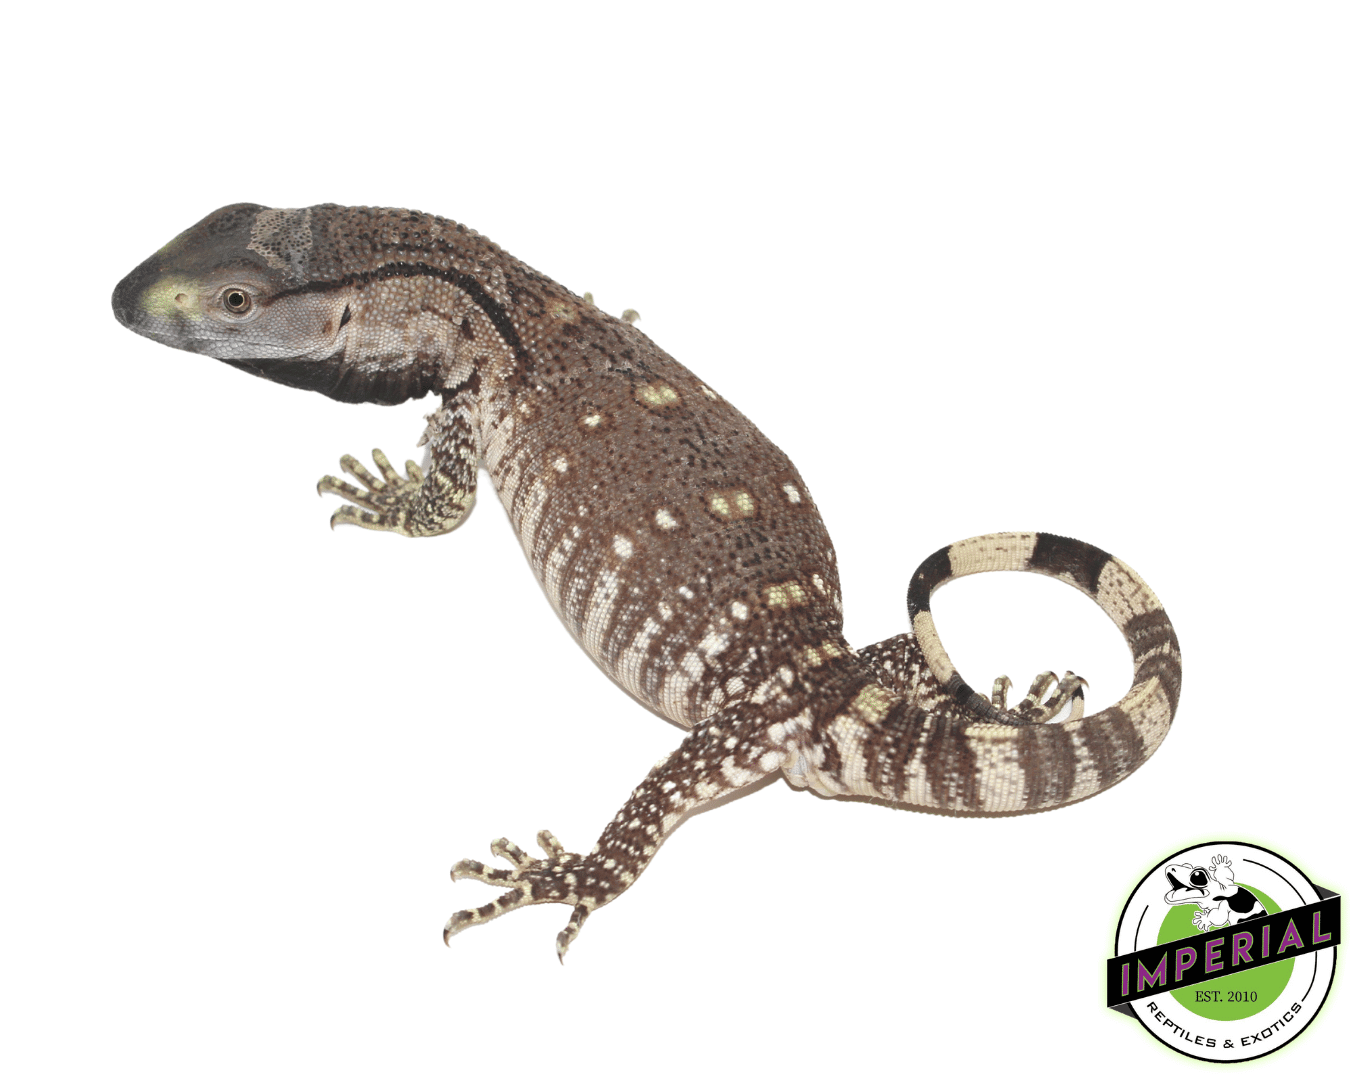 black throat monitor lizard for sale, buy reptiles online